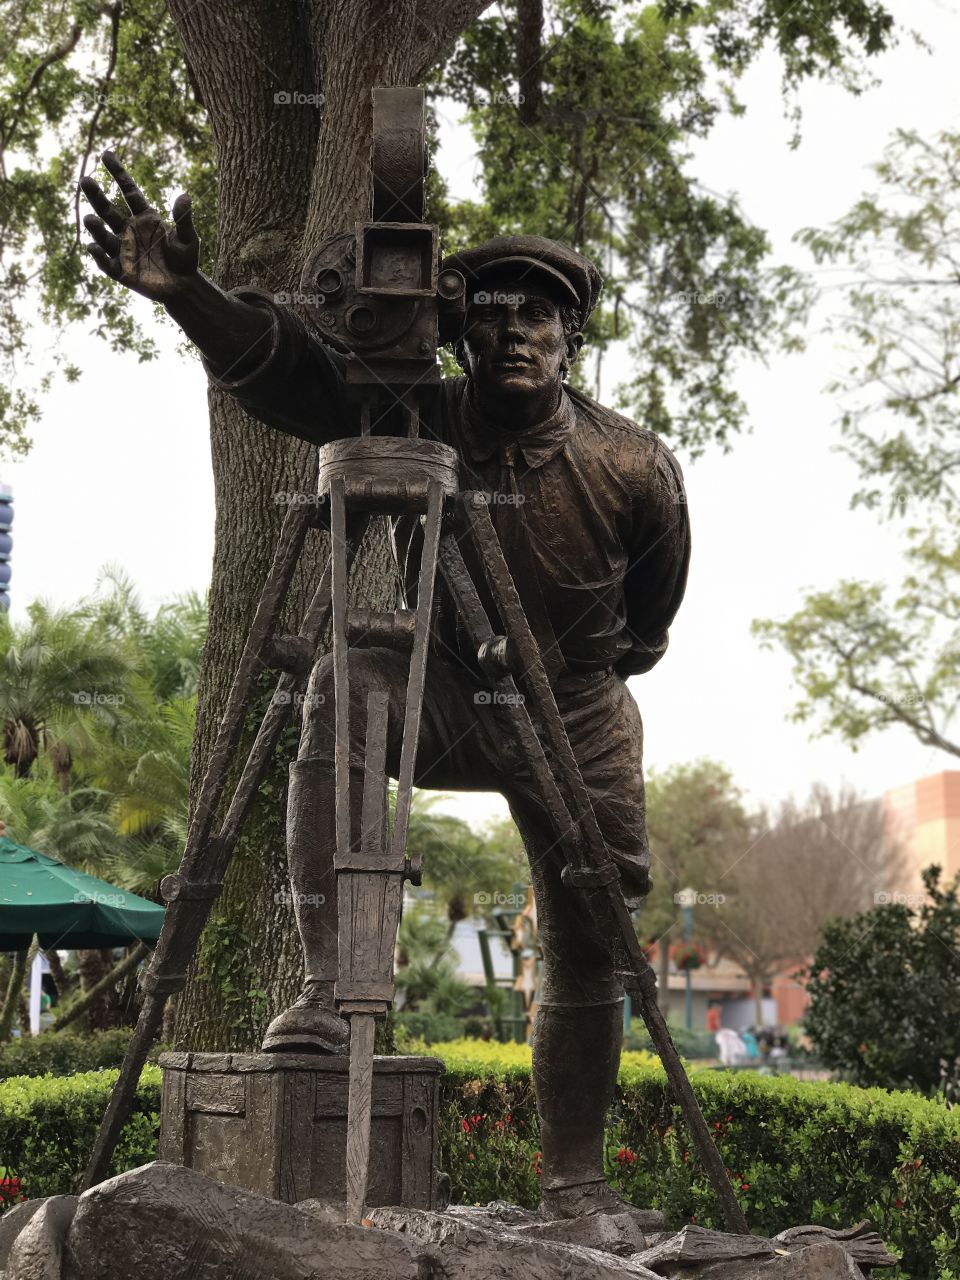 Statue Walt Disney World resort Hollywood studios located in Orlando Florida USA